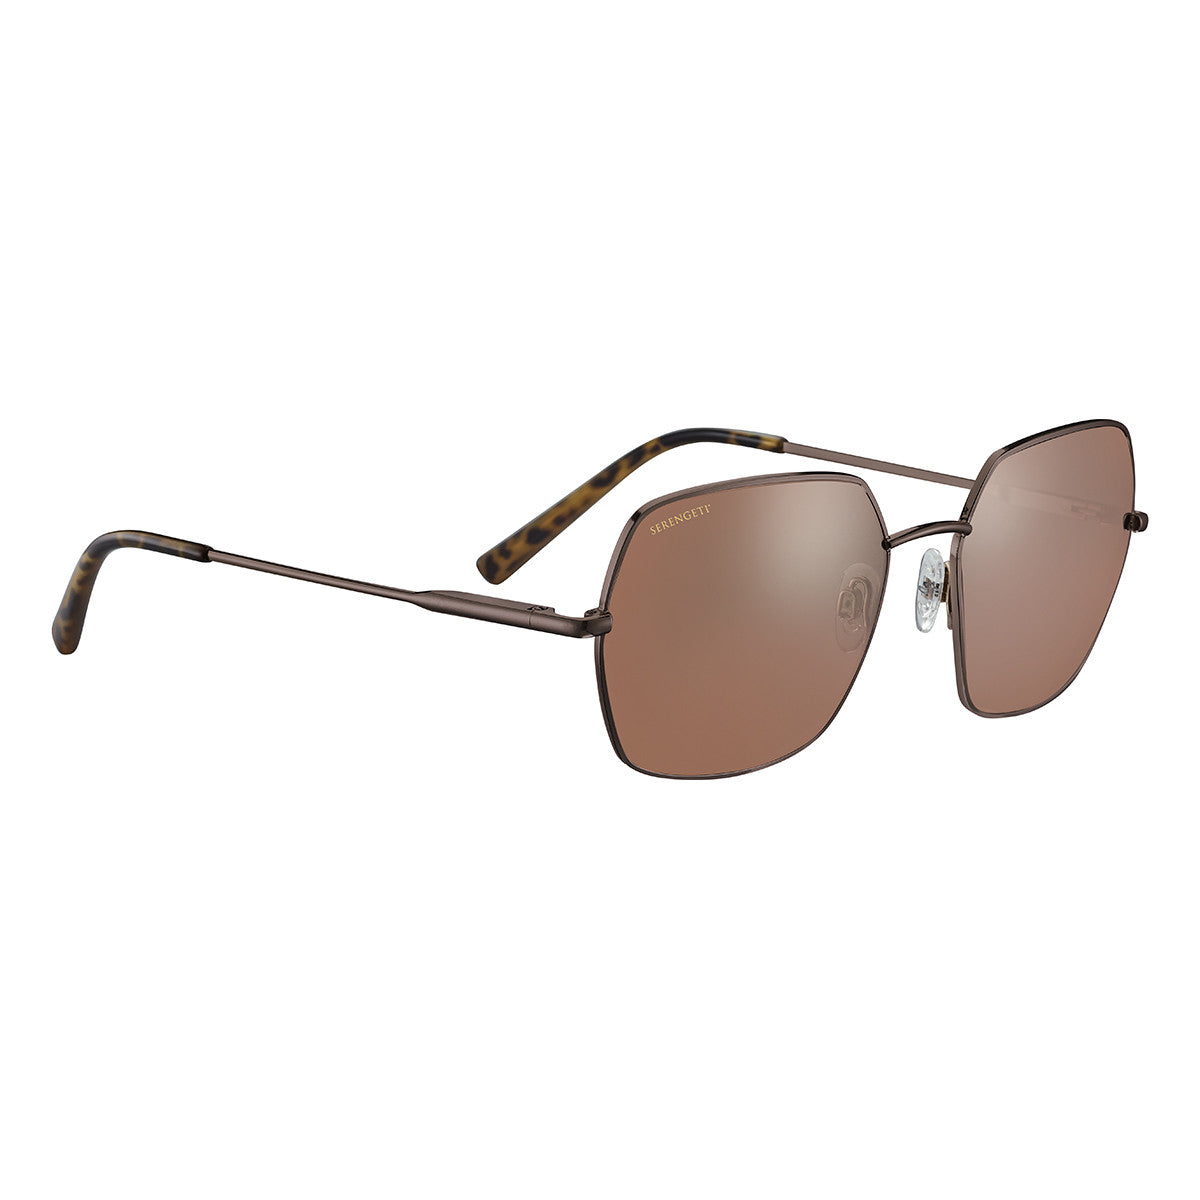 Serengeti Loy Sunglasses  Shiny Chocolate Brown Medium, Large